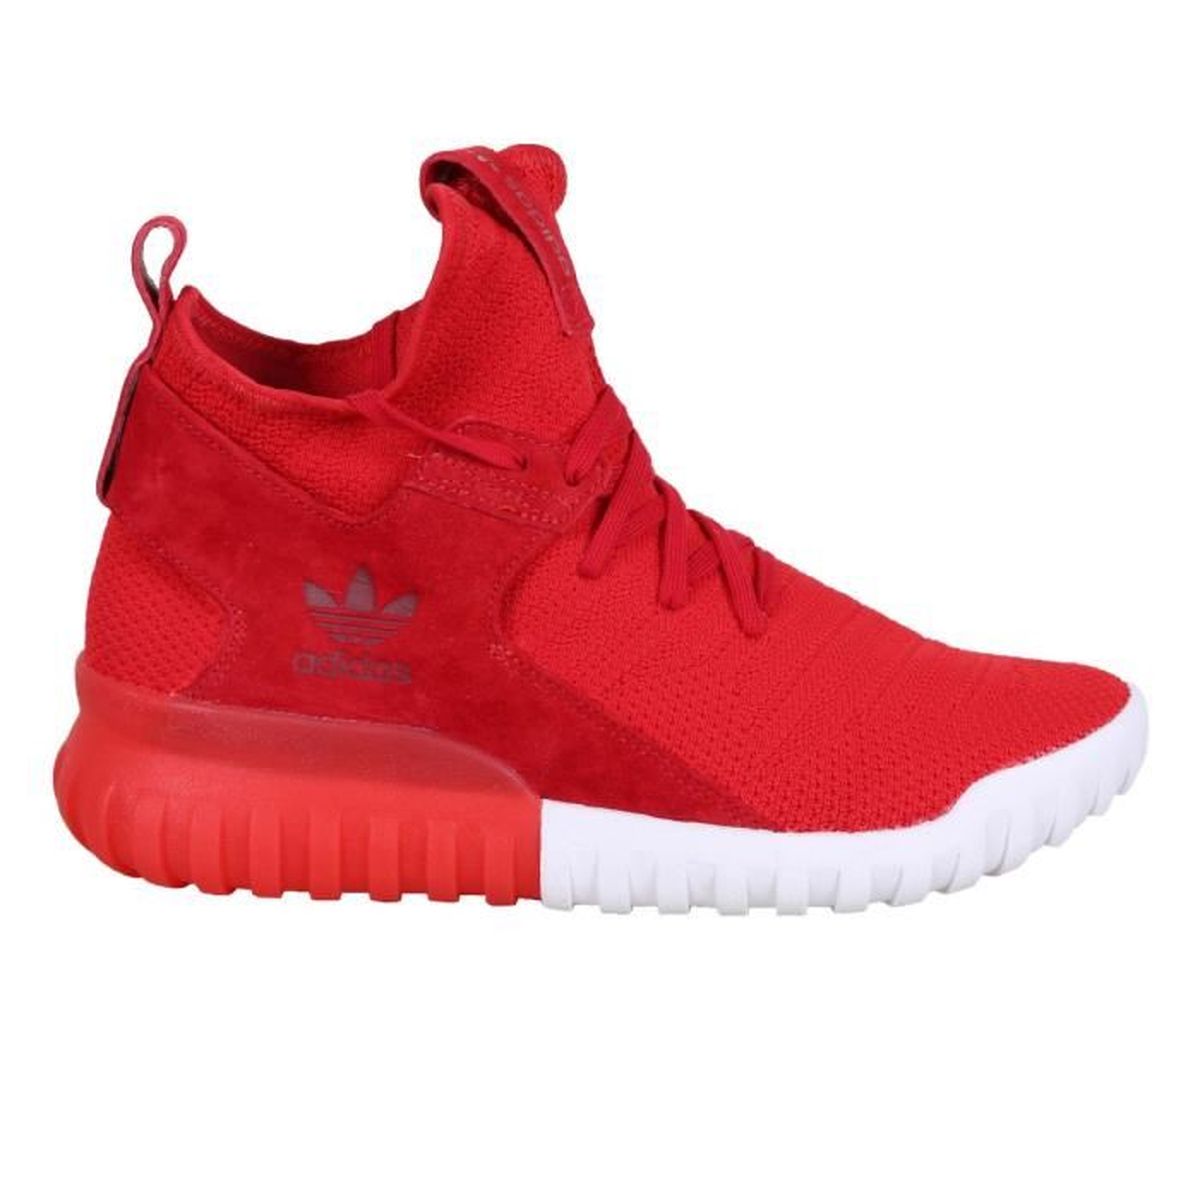 Adidas Tubular X Pk Chaussures de Sport Homme Rouge ADIDAS - Achat 